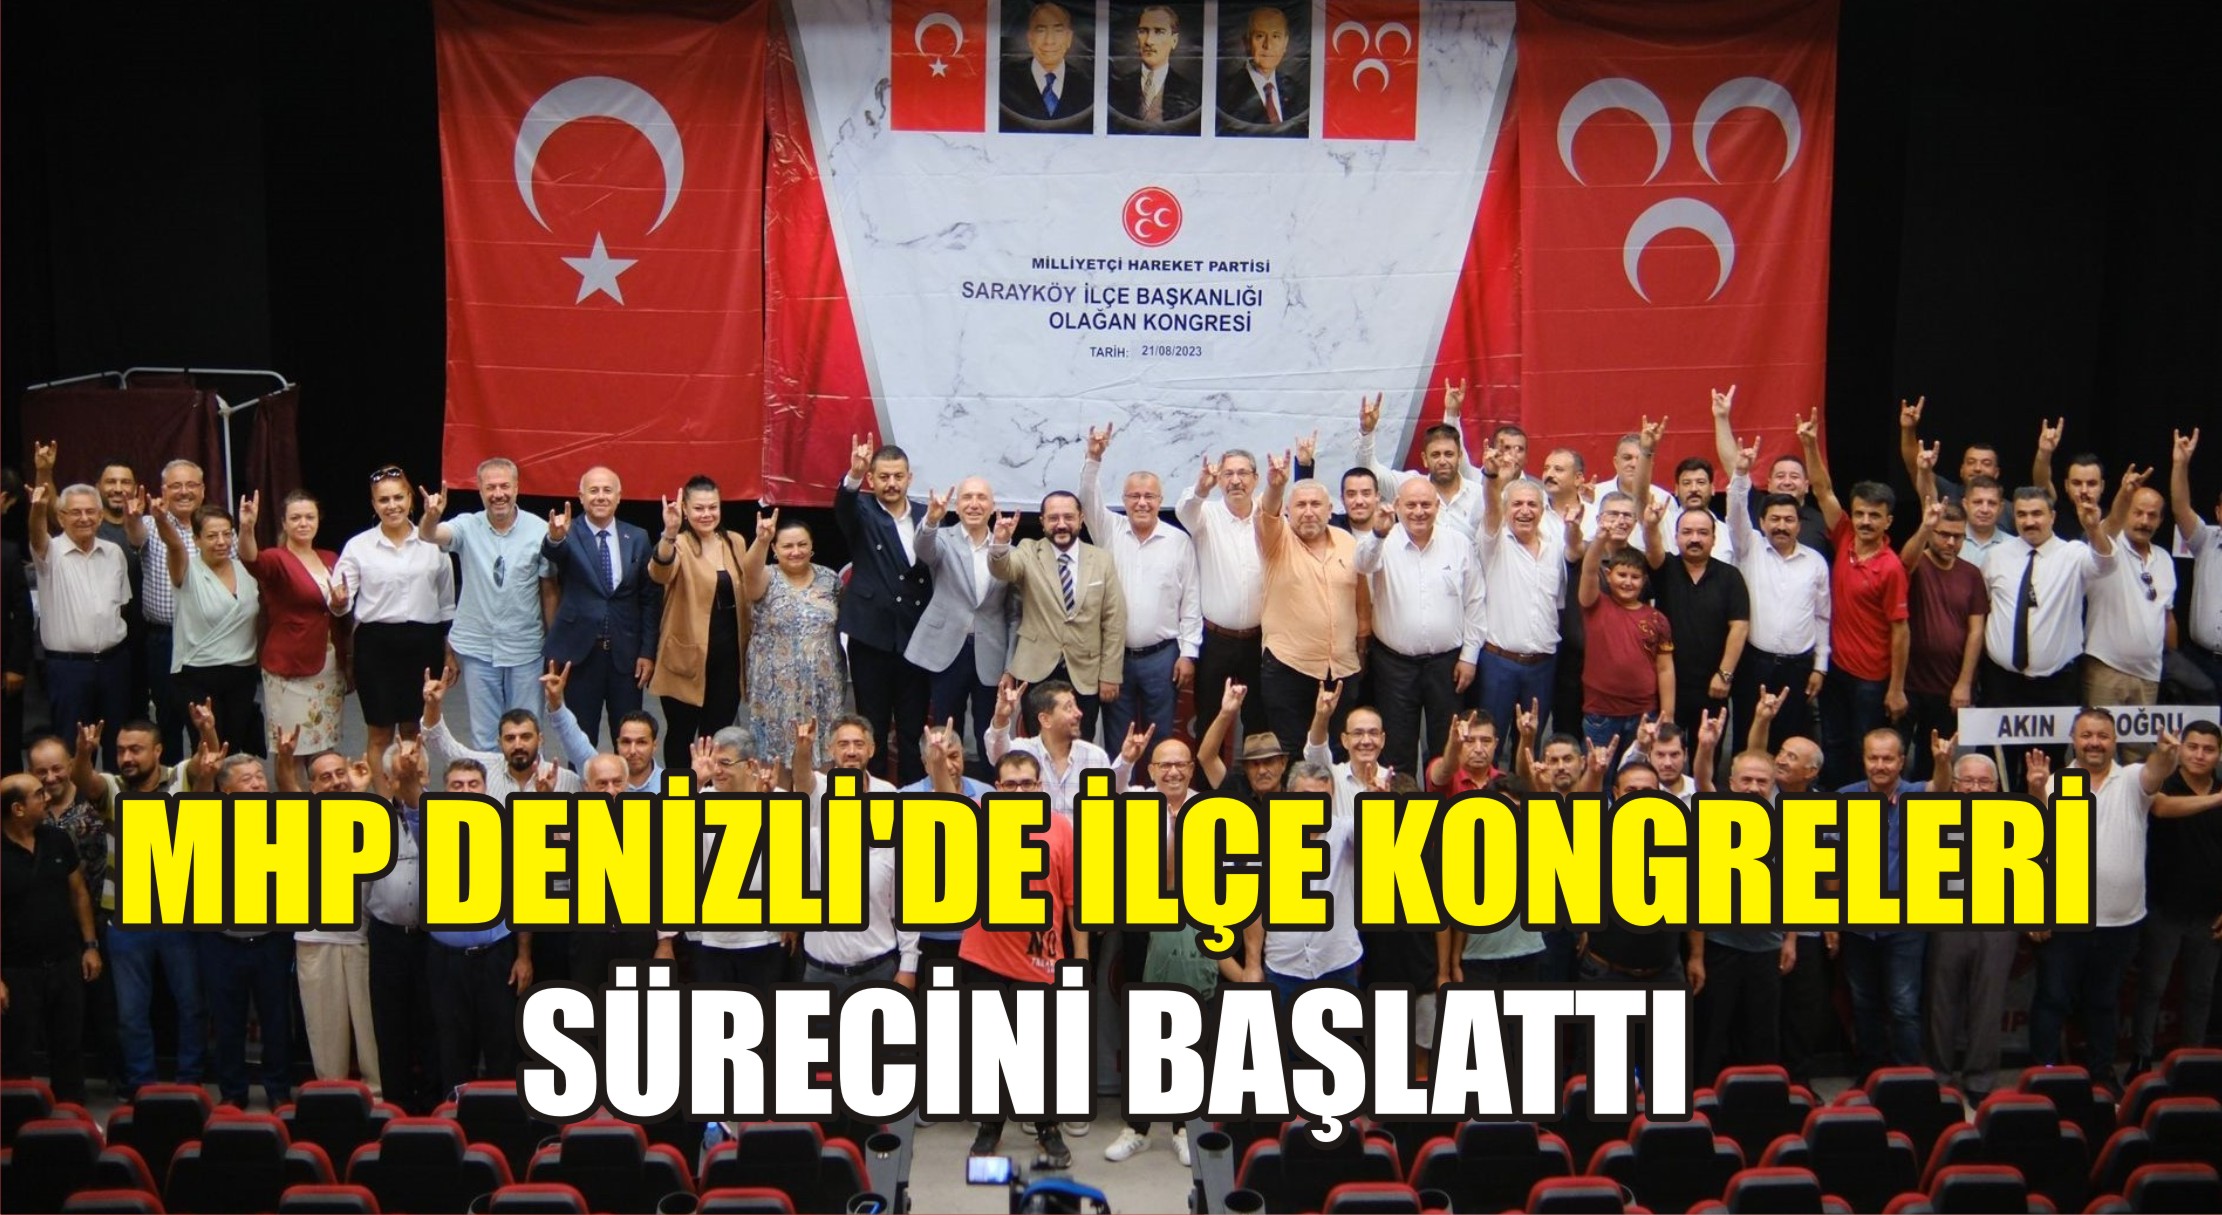  Milliyetçi Hareket Partisi (MHP)